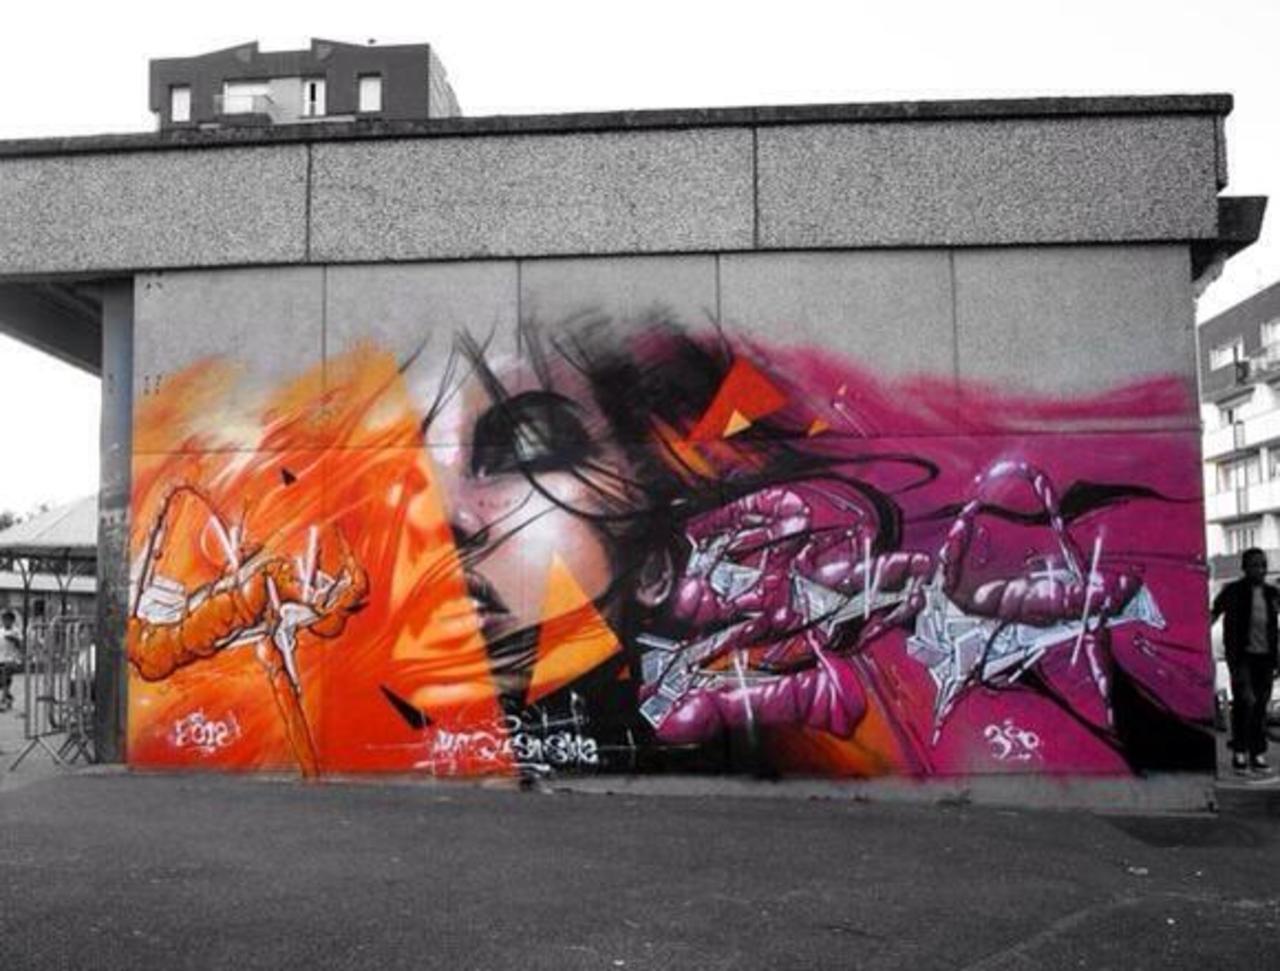 RT @designopinion: Colab of Sly2, Kat, Quesa Street Art wall in Paris, France #art #mural #graffiti #streetart http://t.co/y2QYWW7z6Q